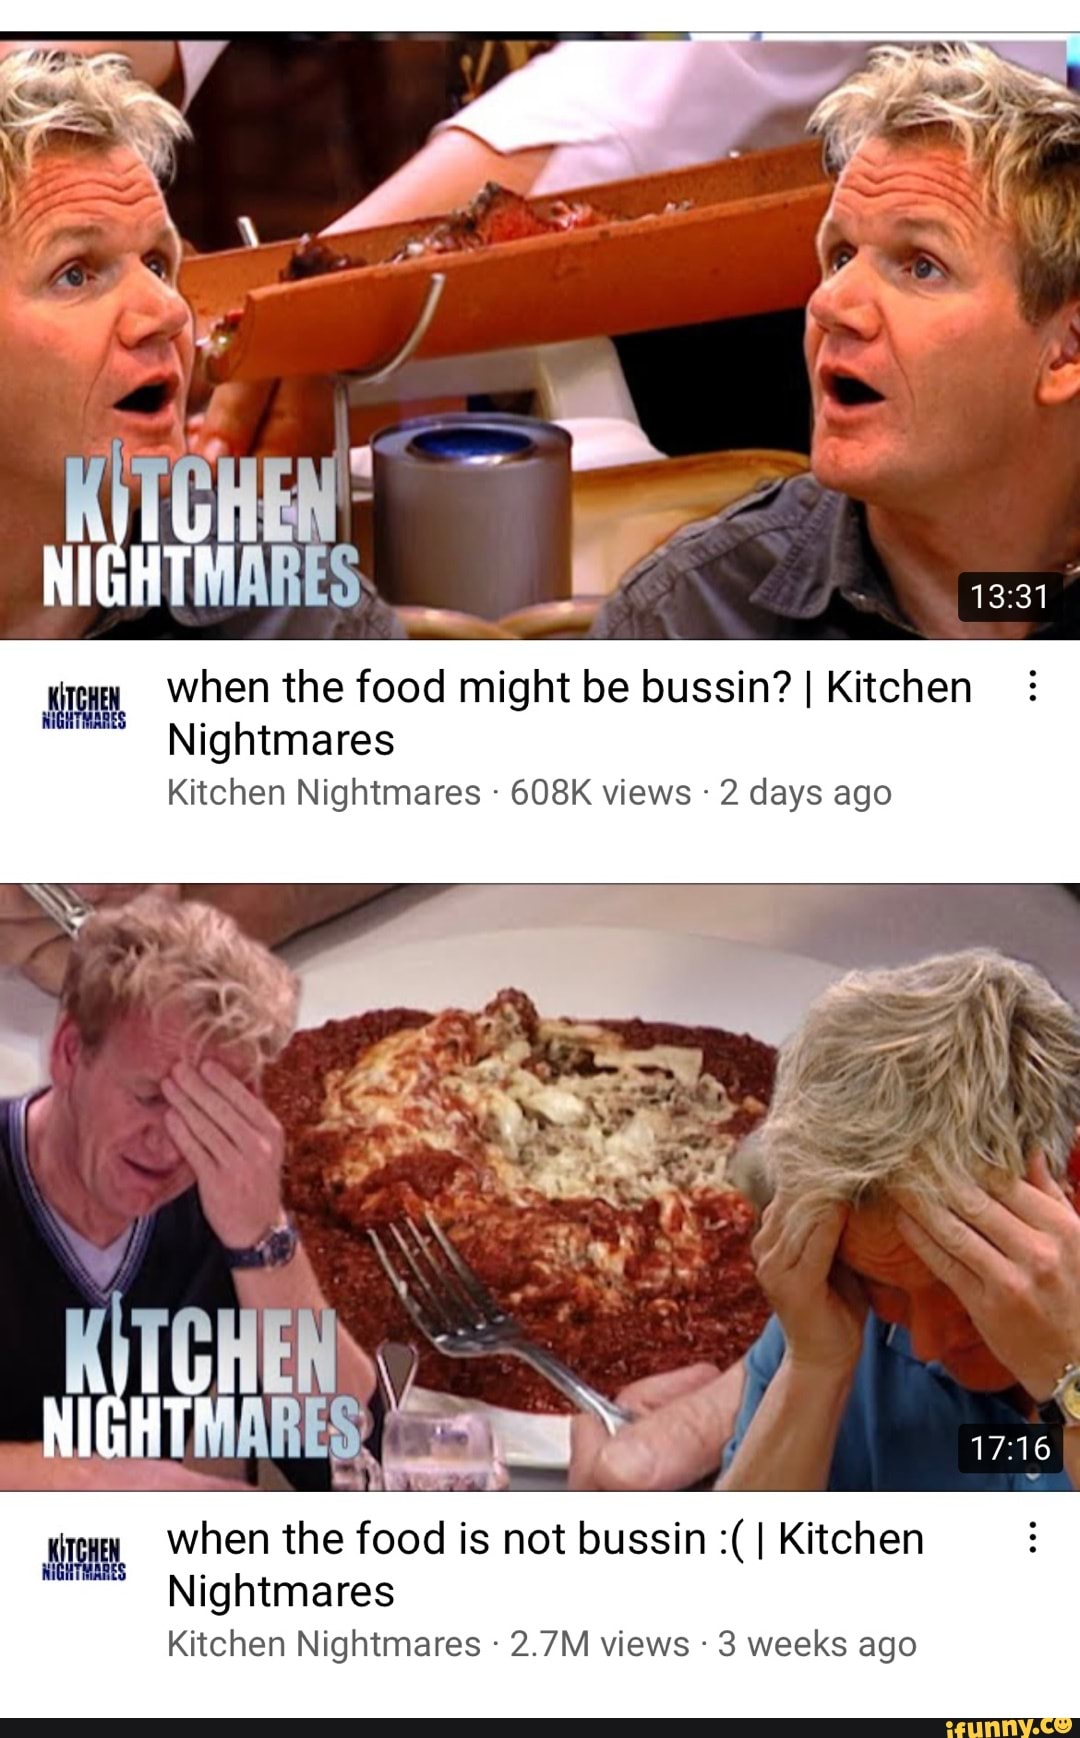 I was on Kitchen Nightmares 